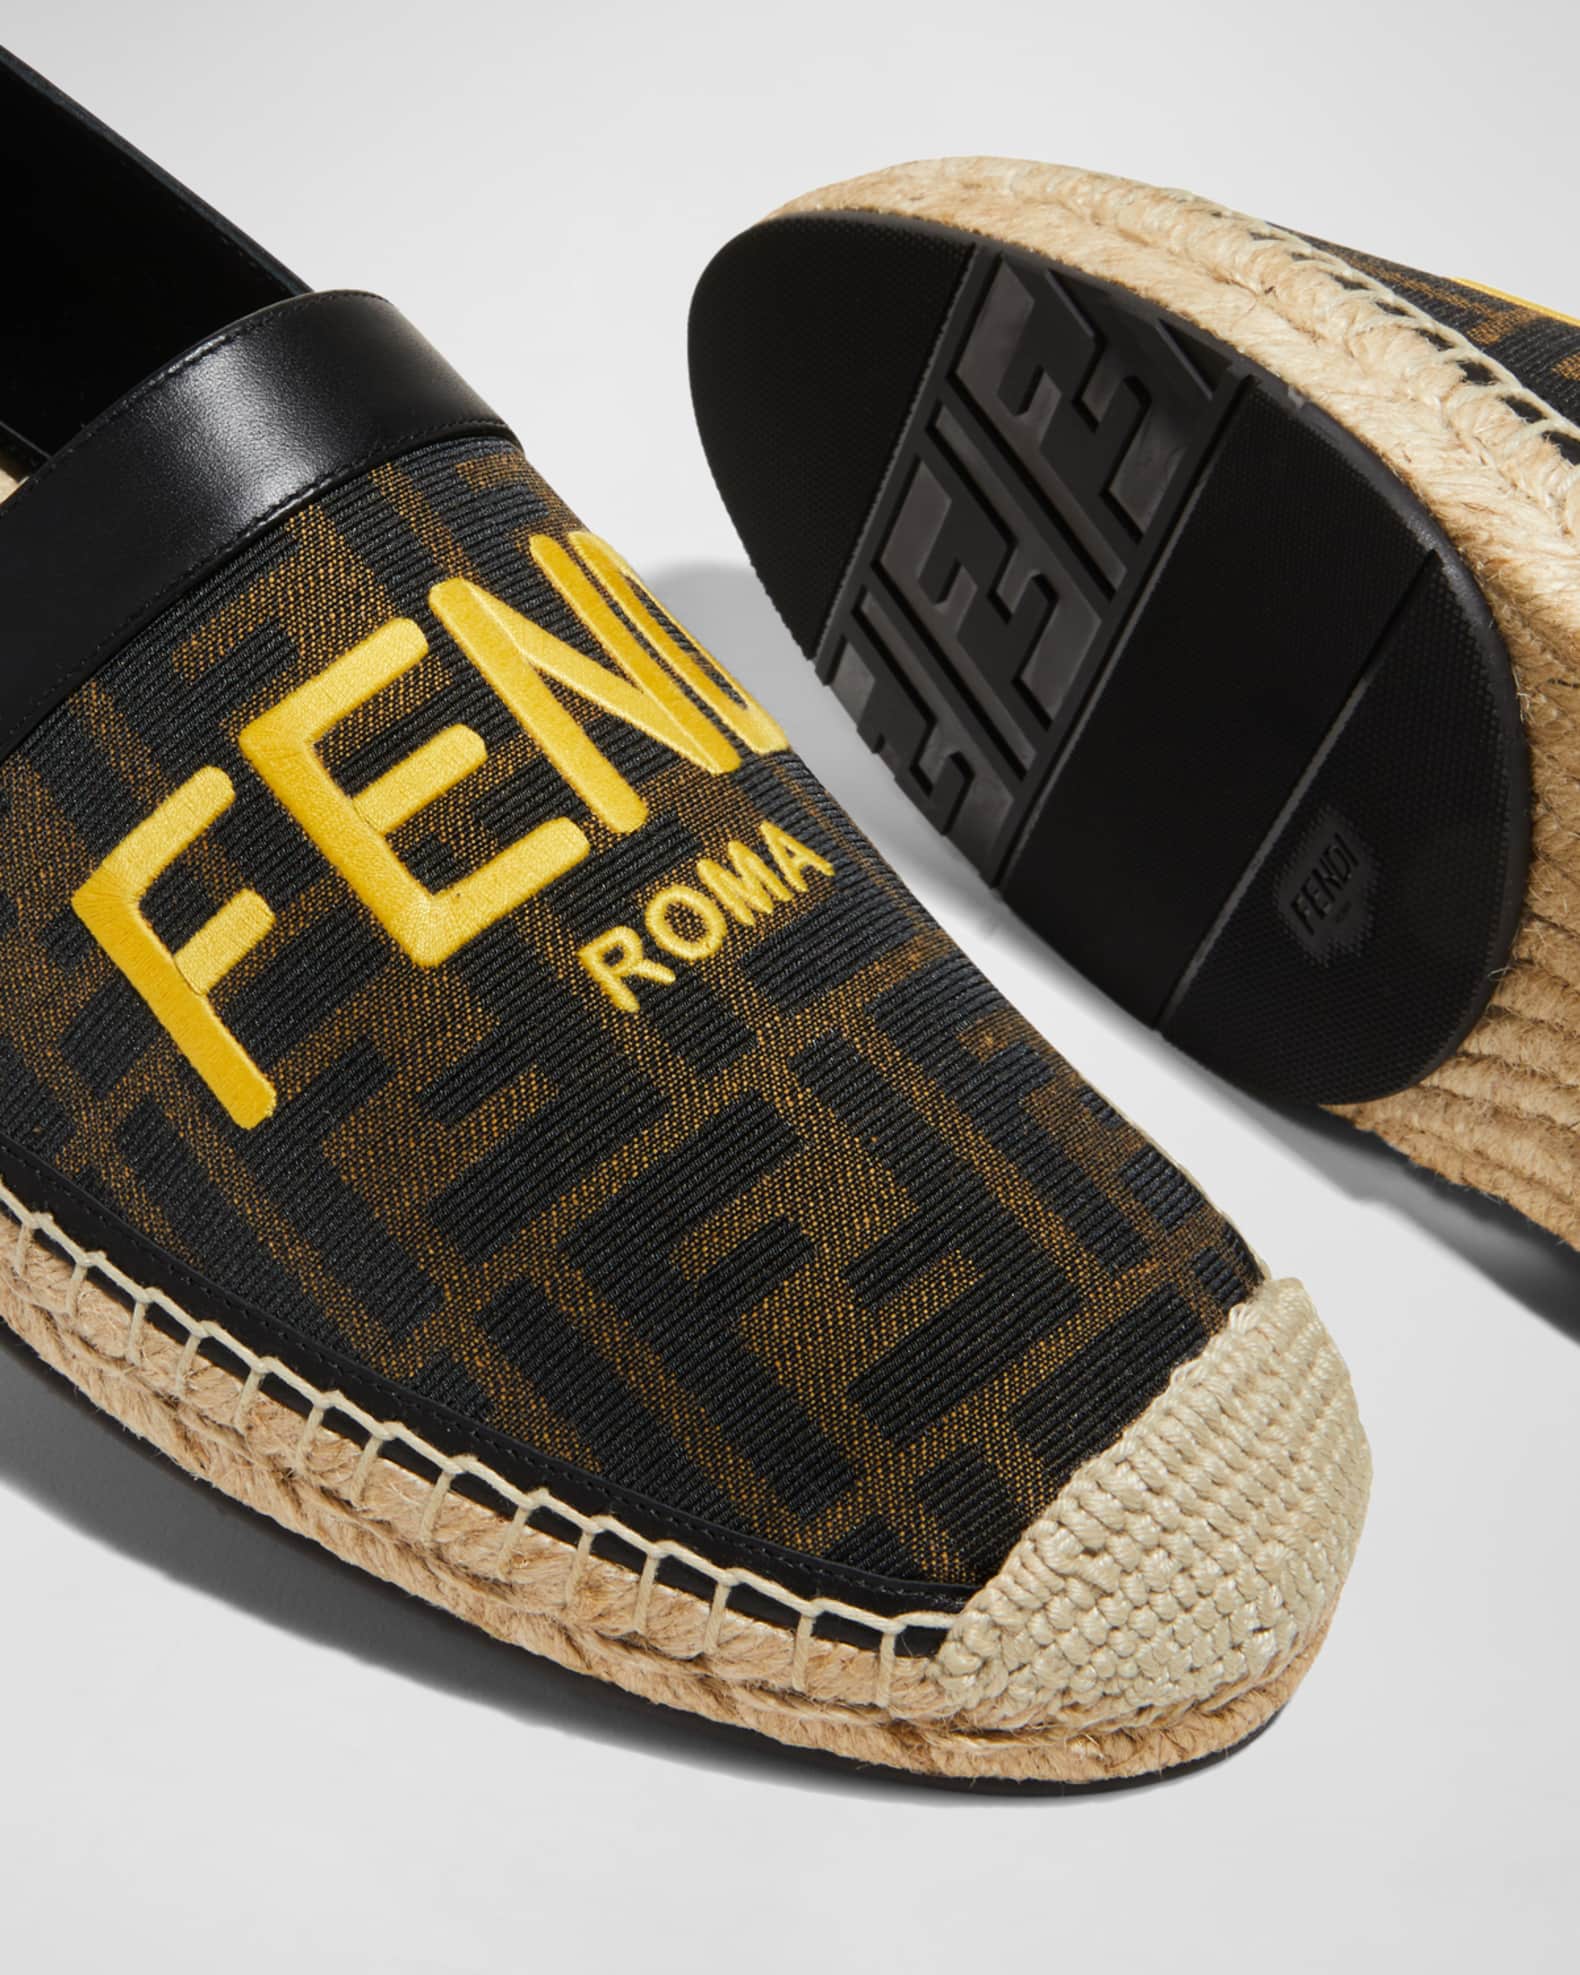 Fendi Men's FF Jacquard Leather-Trim Espadrilles